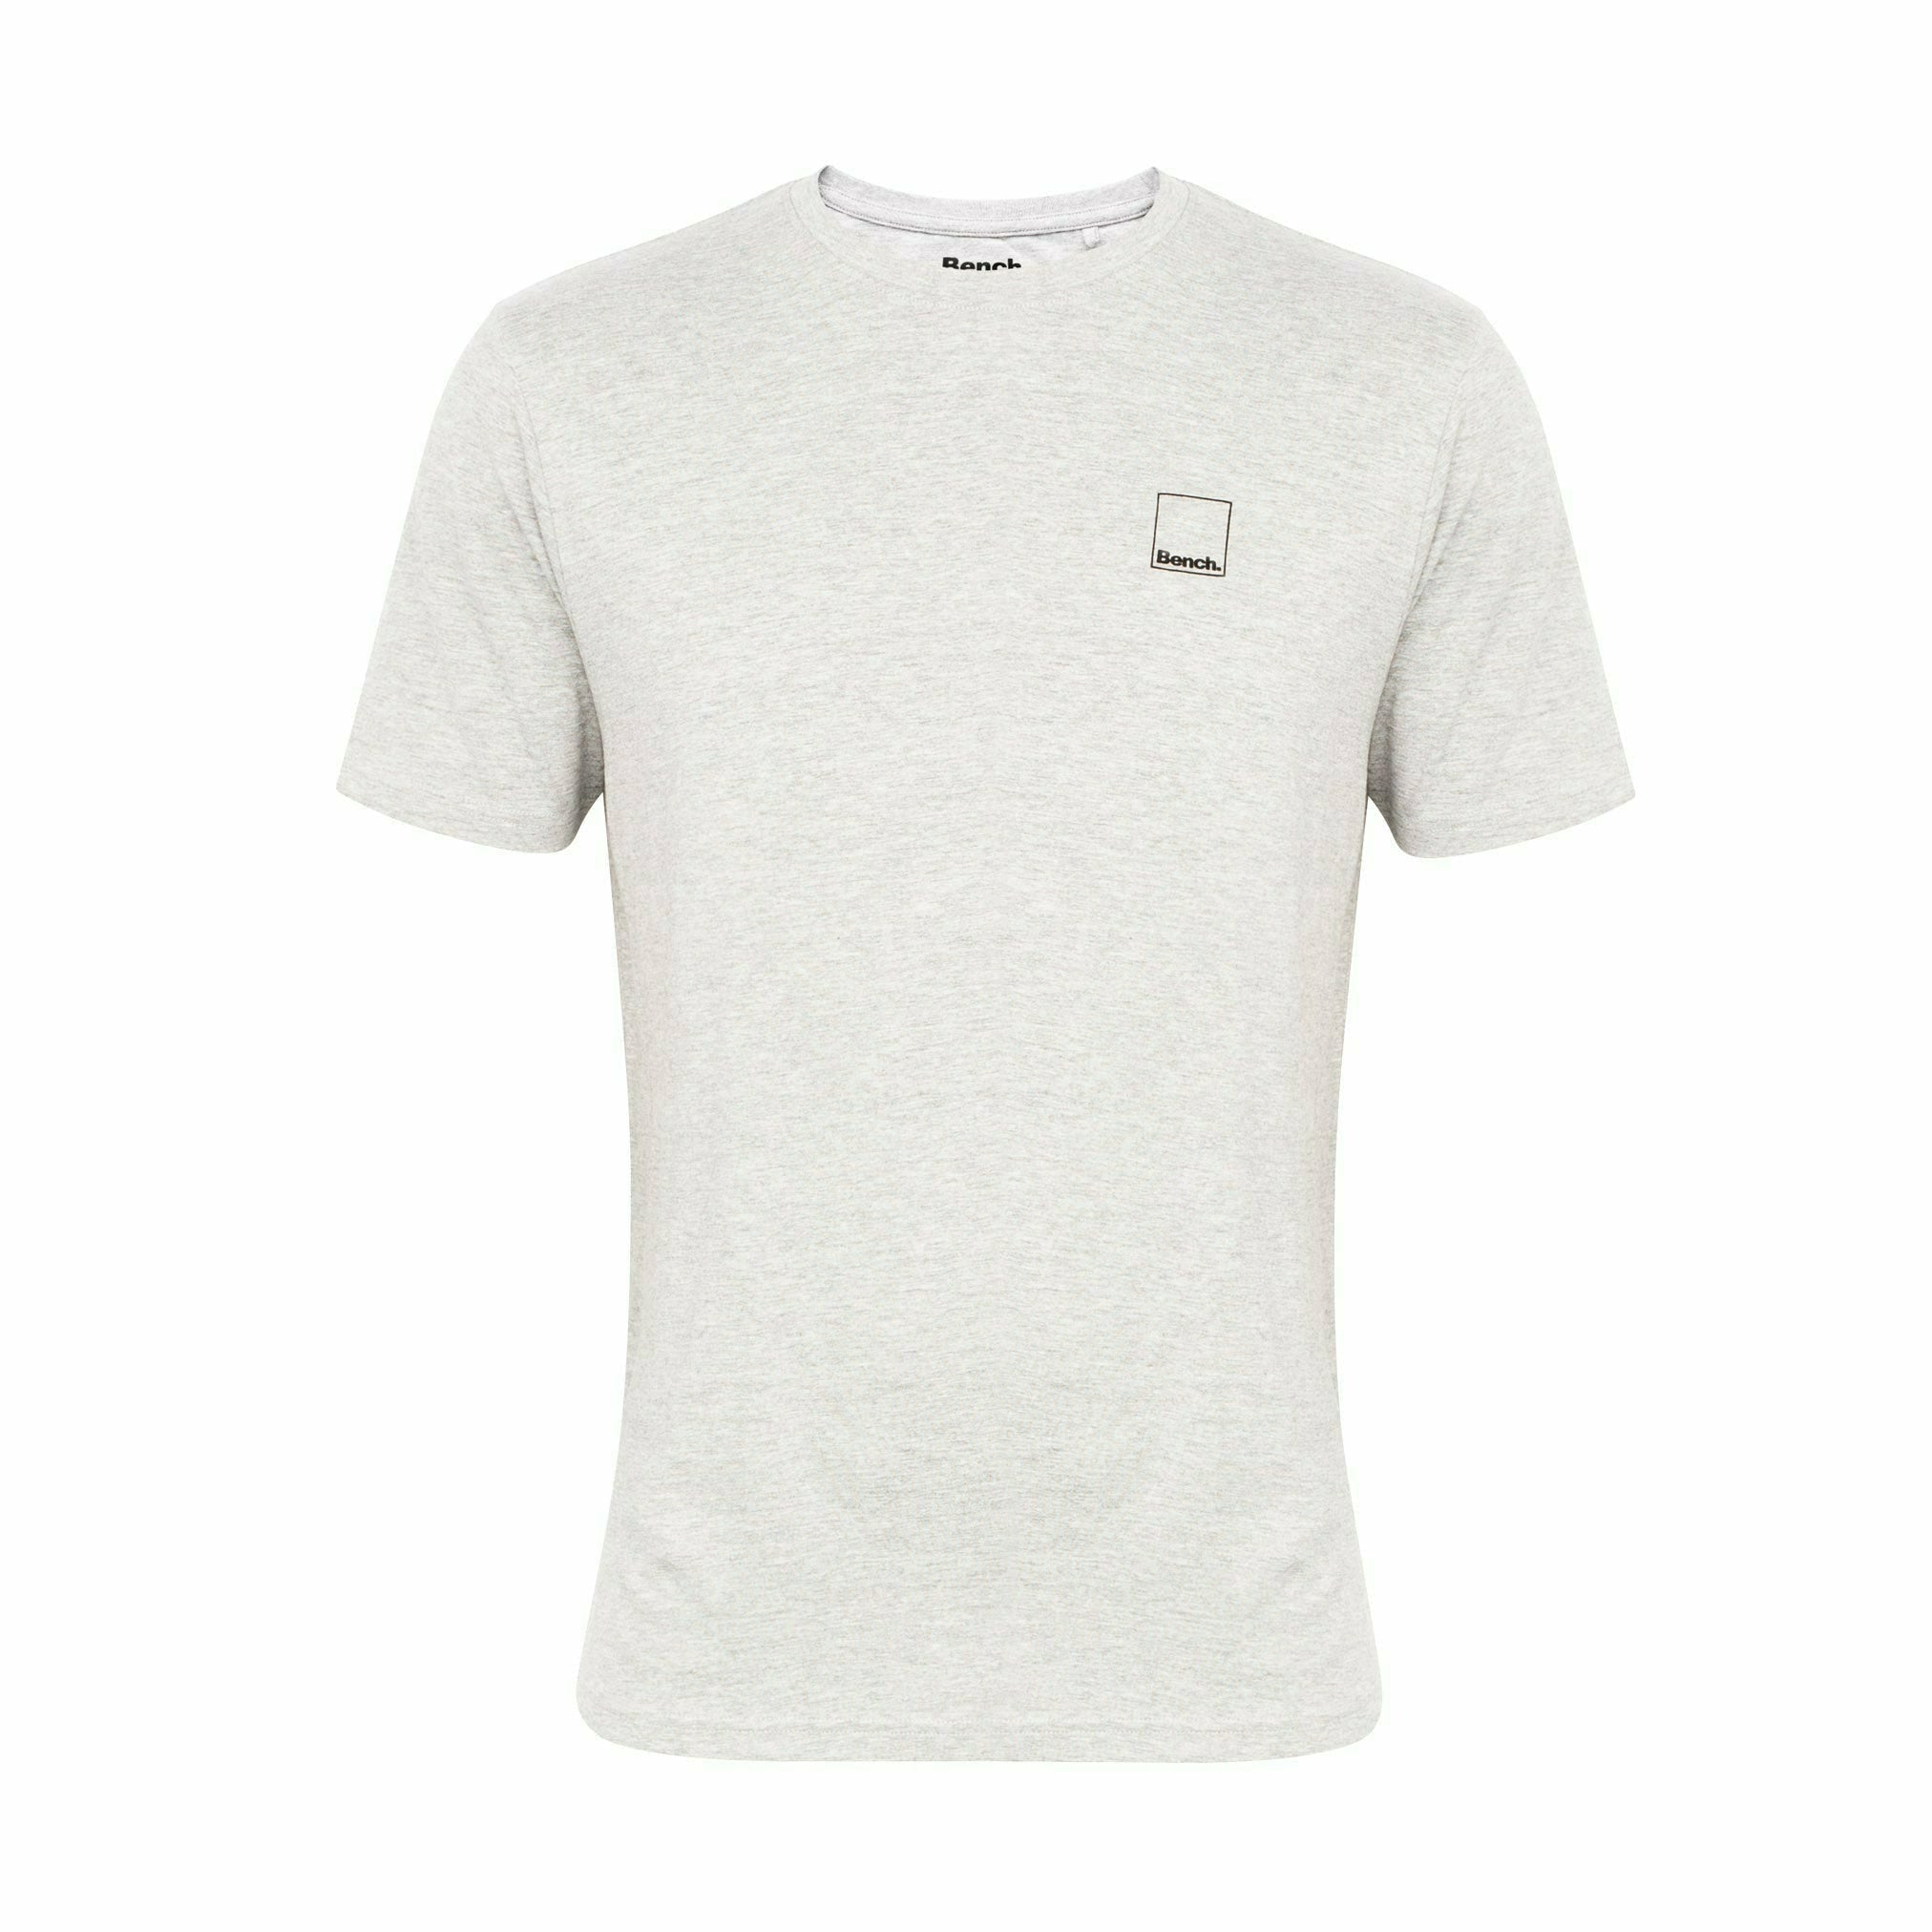 Mens 'ISAAC' 10 Pack T-Shirt Set - ASSORTED - Shop at www.Bench.co.uk #LoveMyHood